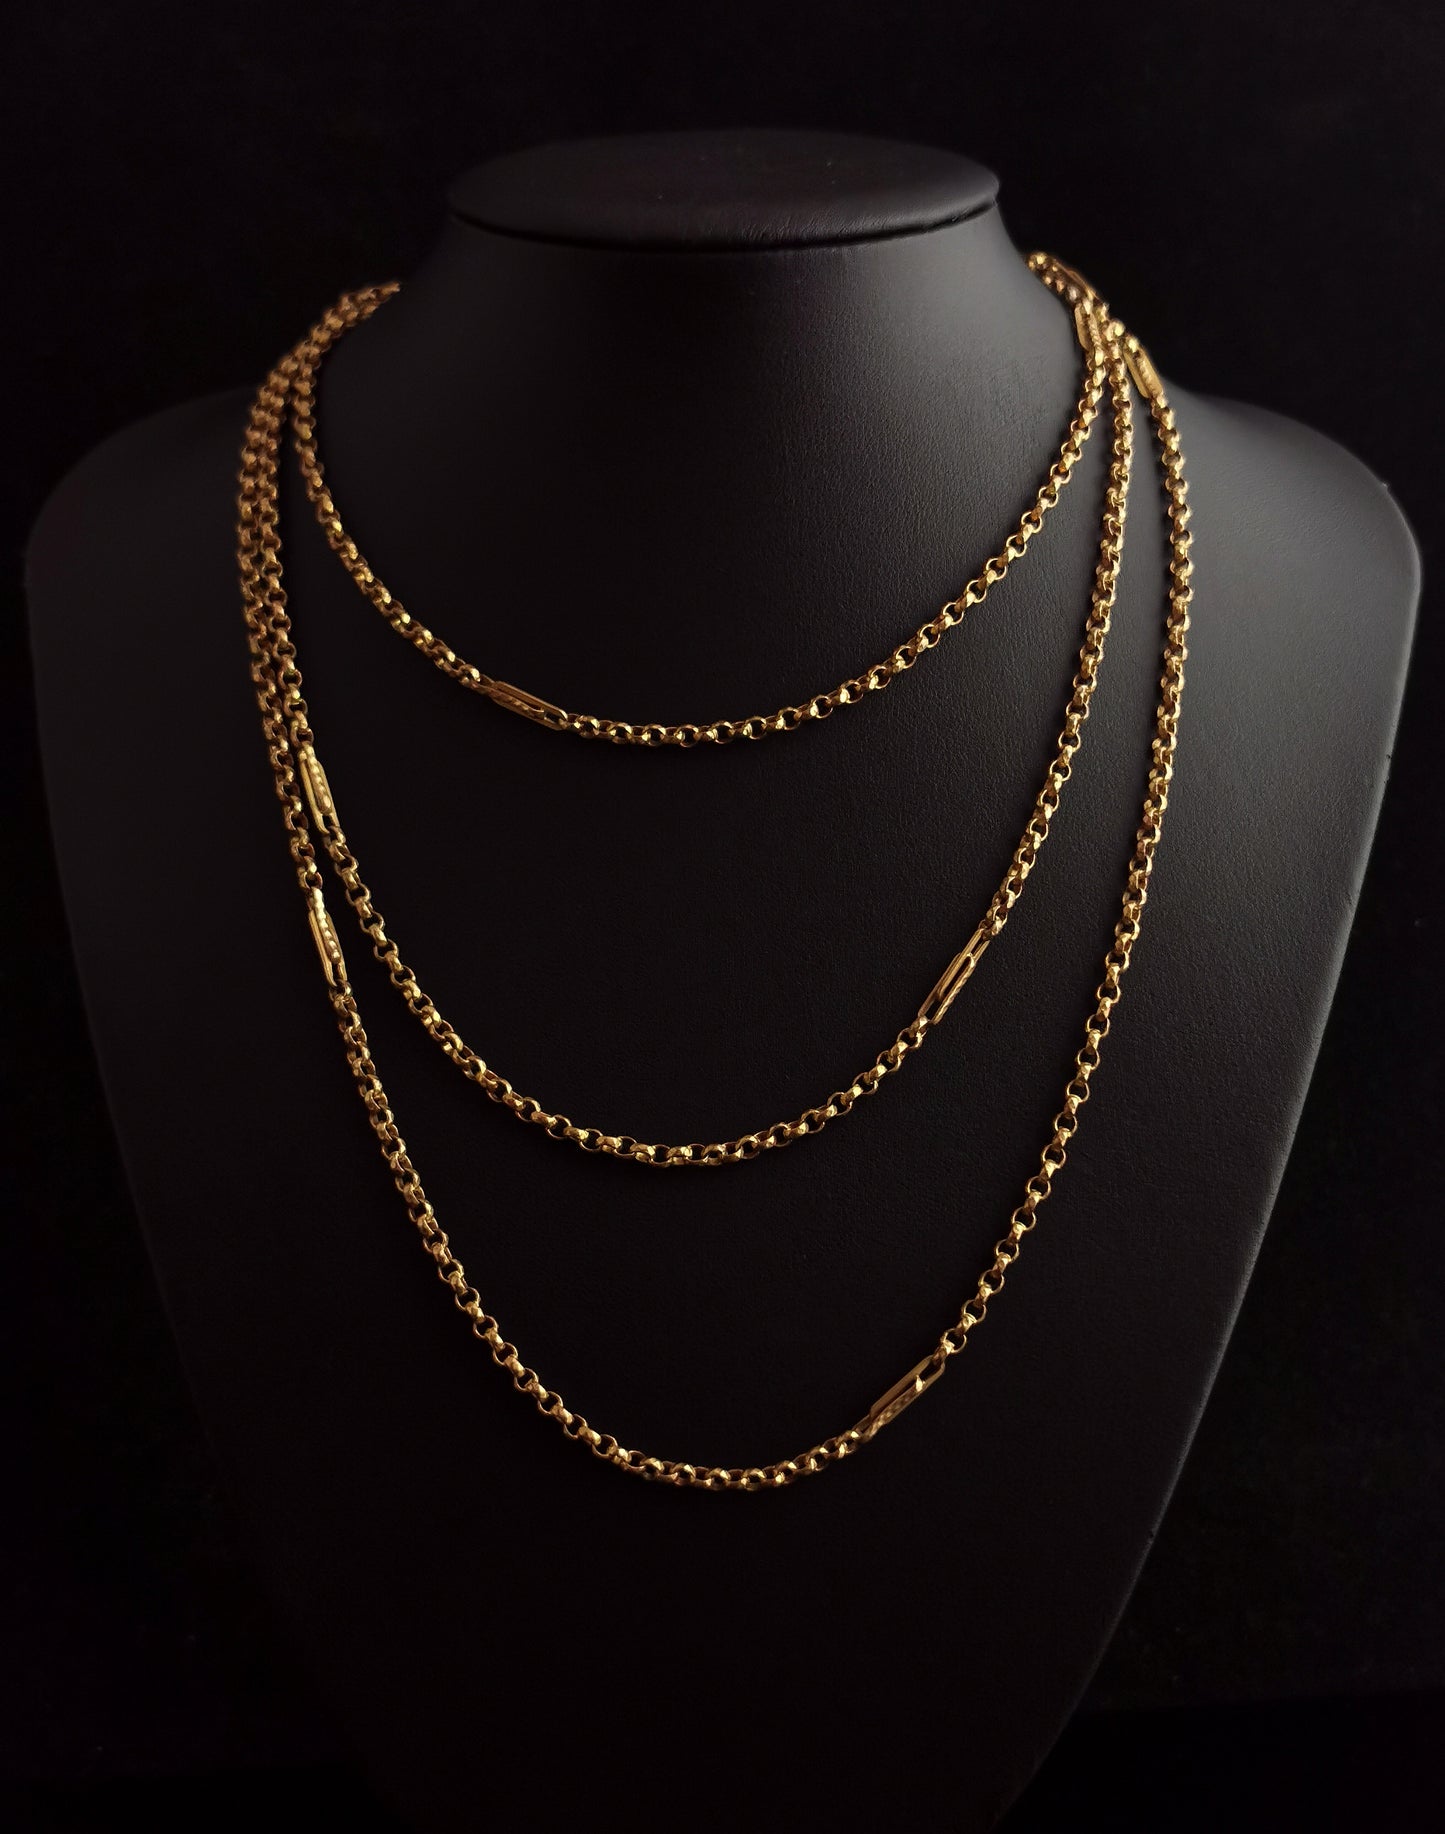 Antique Victorian longuard chain necklace, muff chain